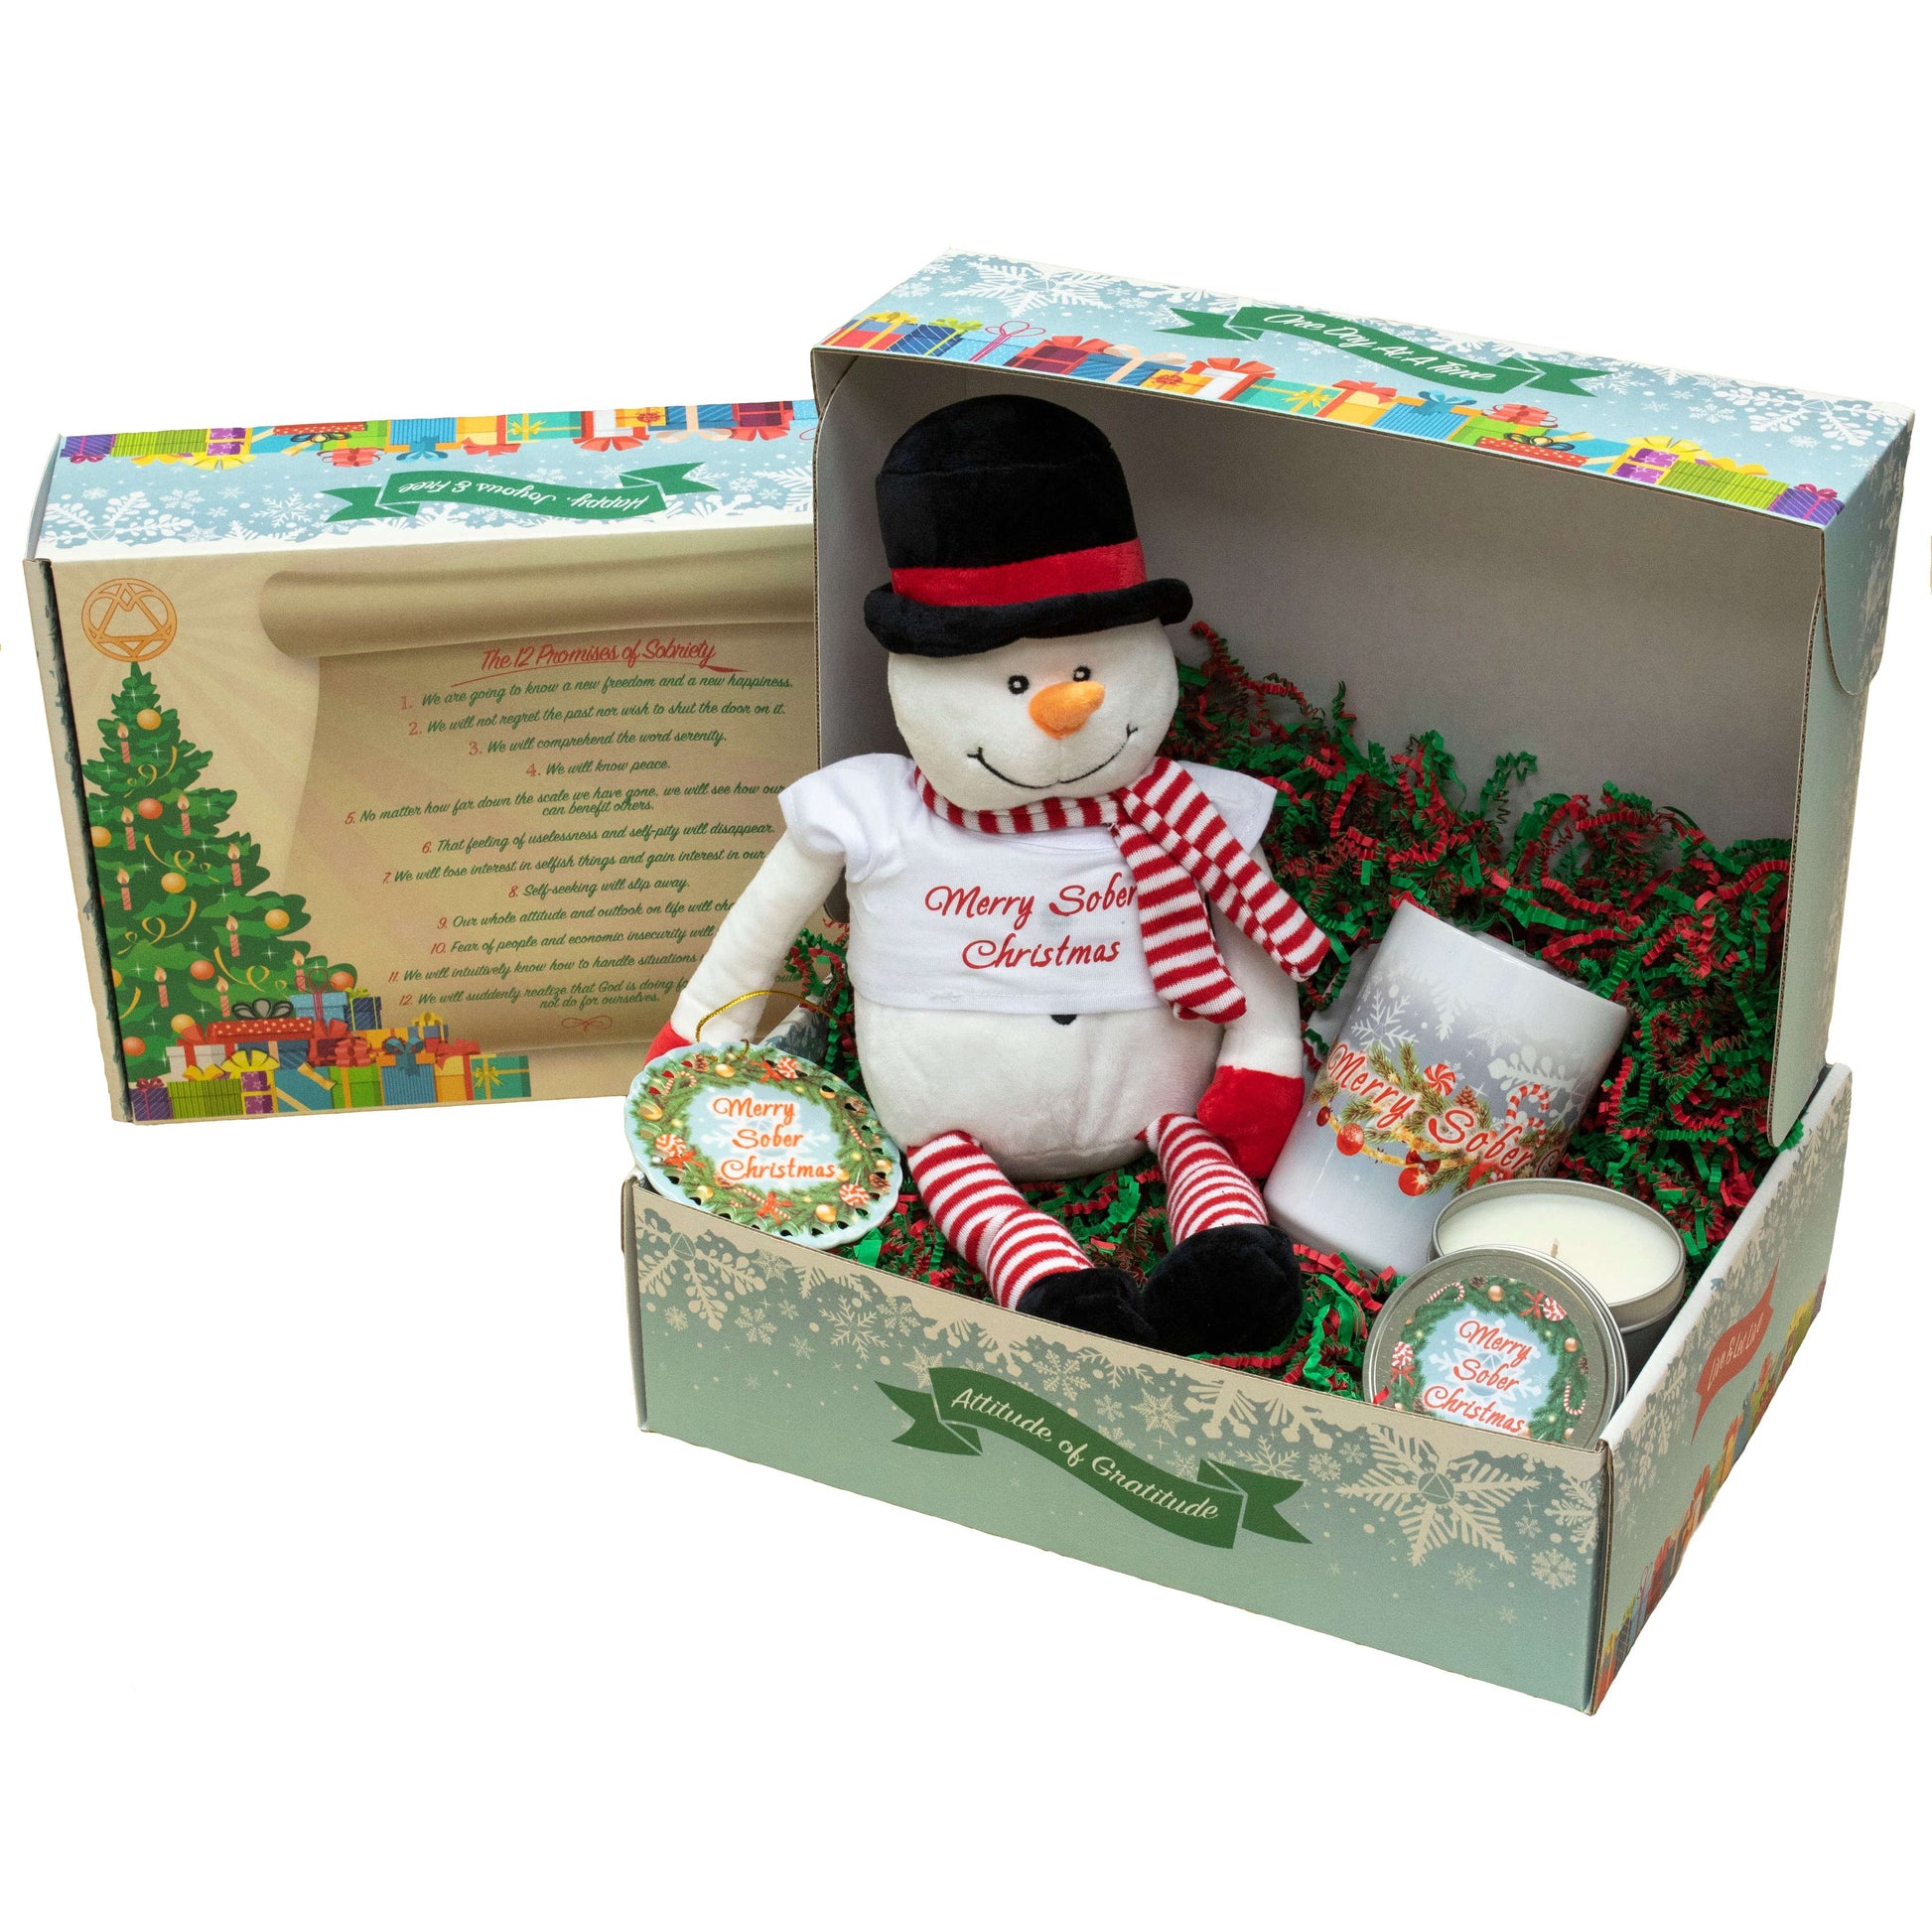 Merry Sober Christmas Box Snowman